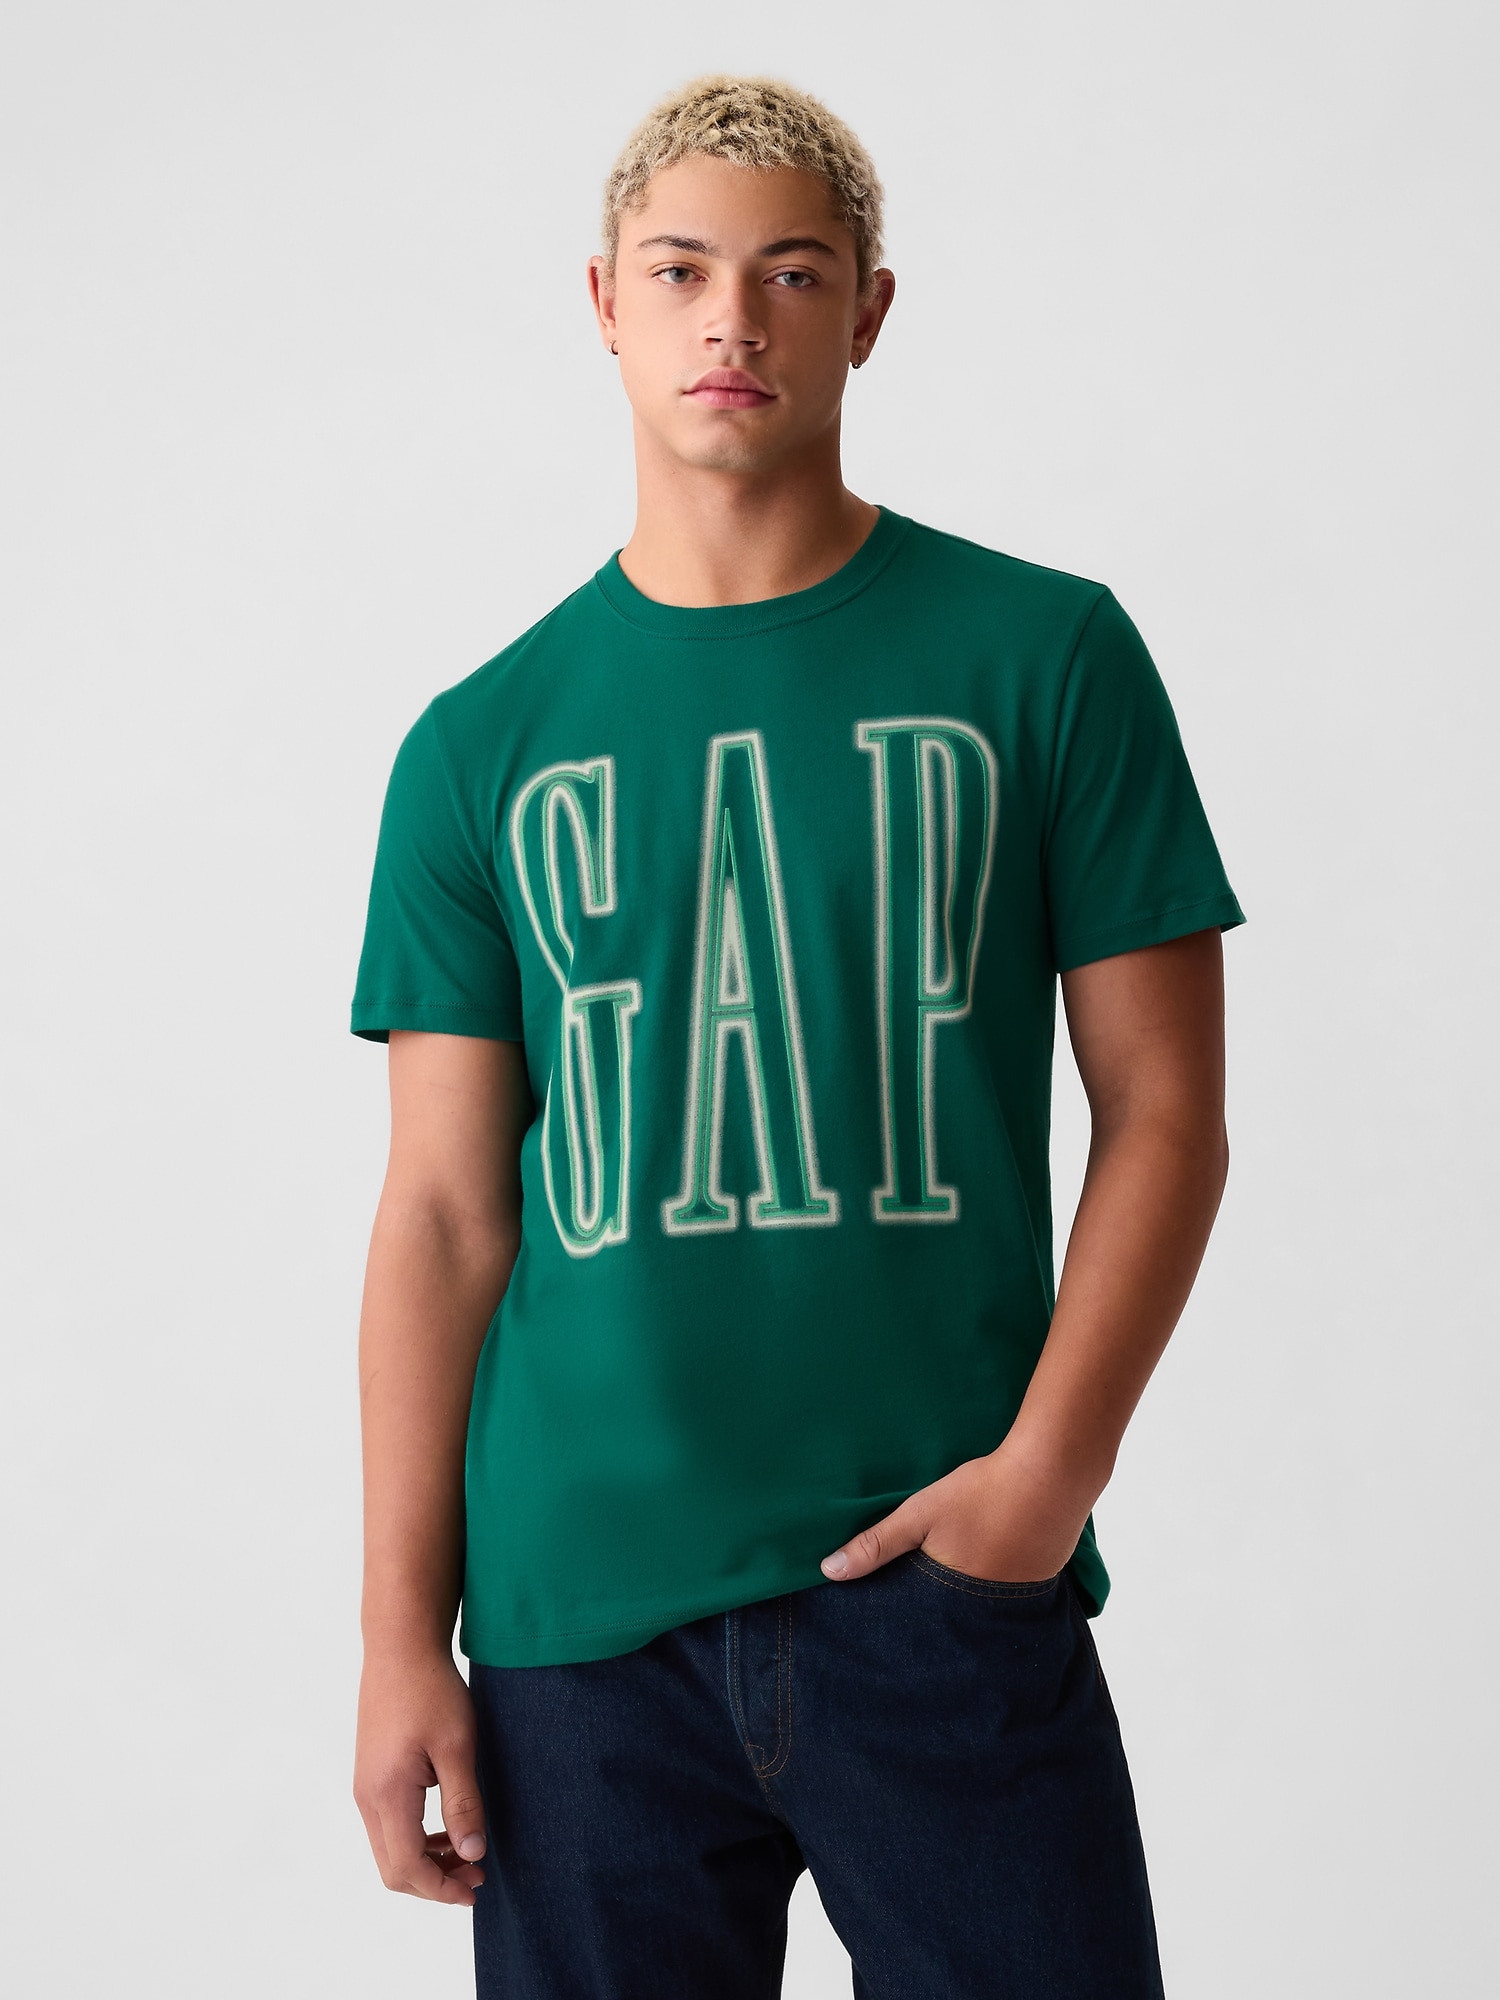 Tシャツ・ポロシャツ | Gap公式オンラインストア